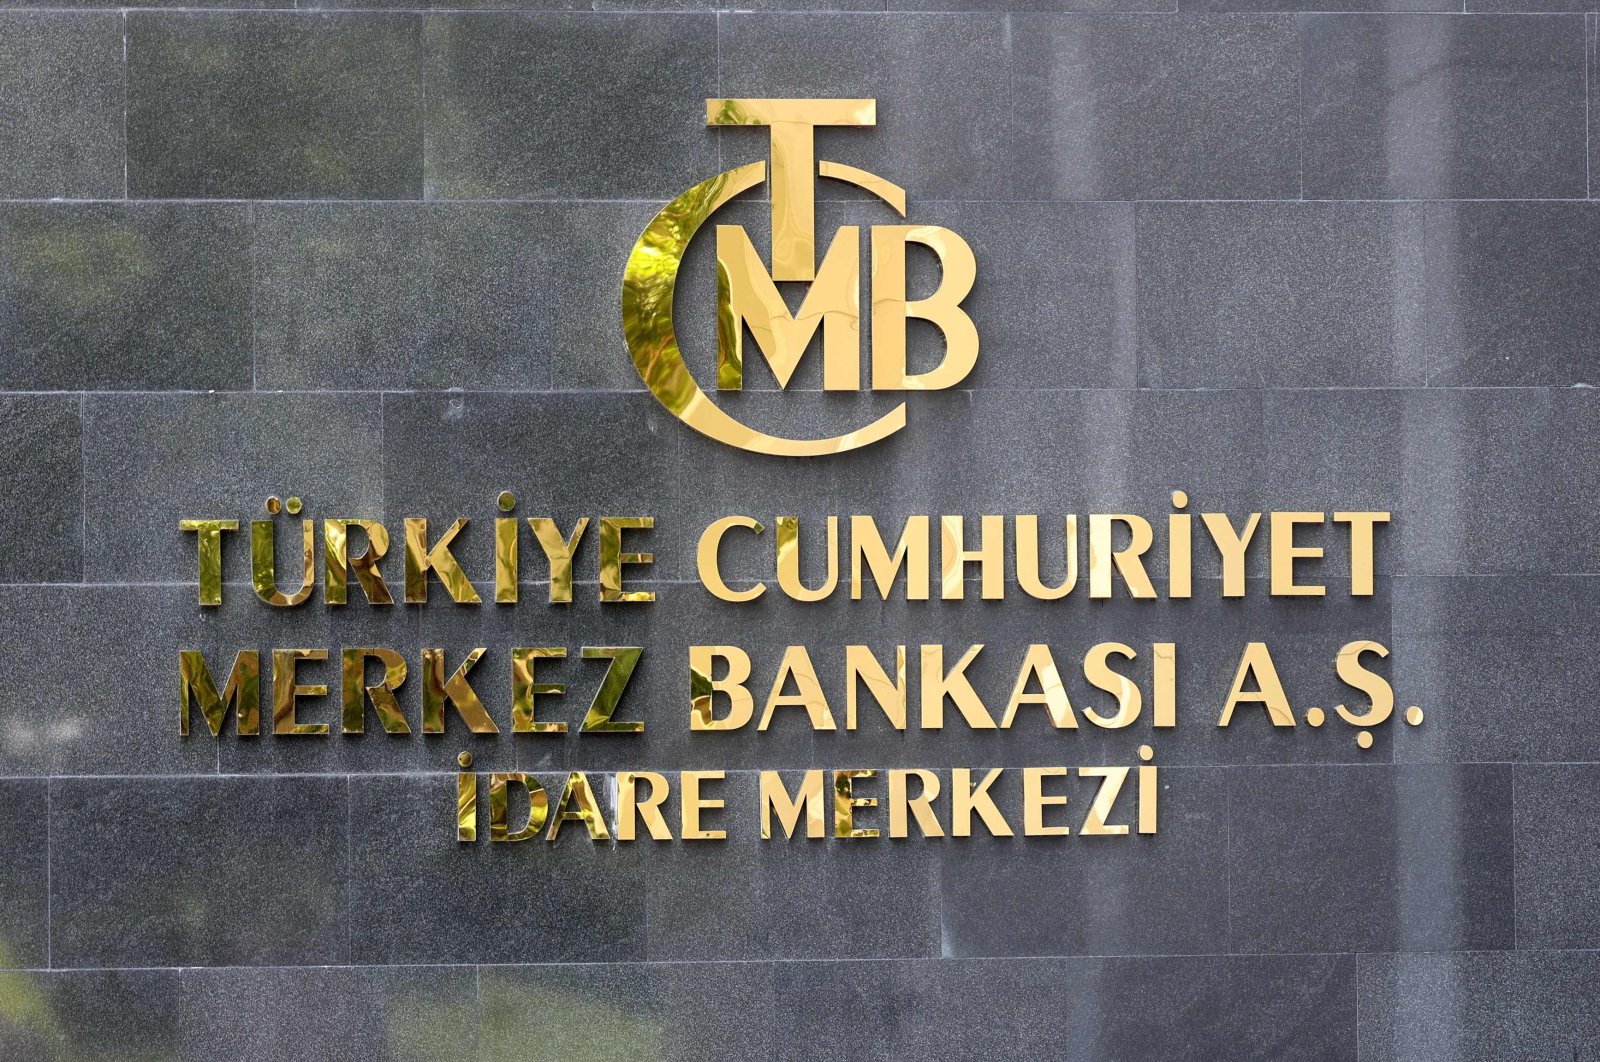 Bank sentral Turki hampir menggandakan suku bunga utama menjadi 15%